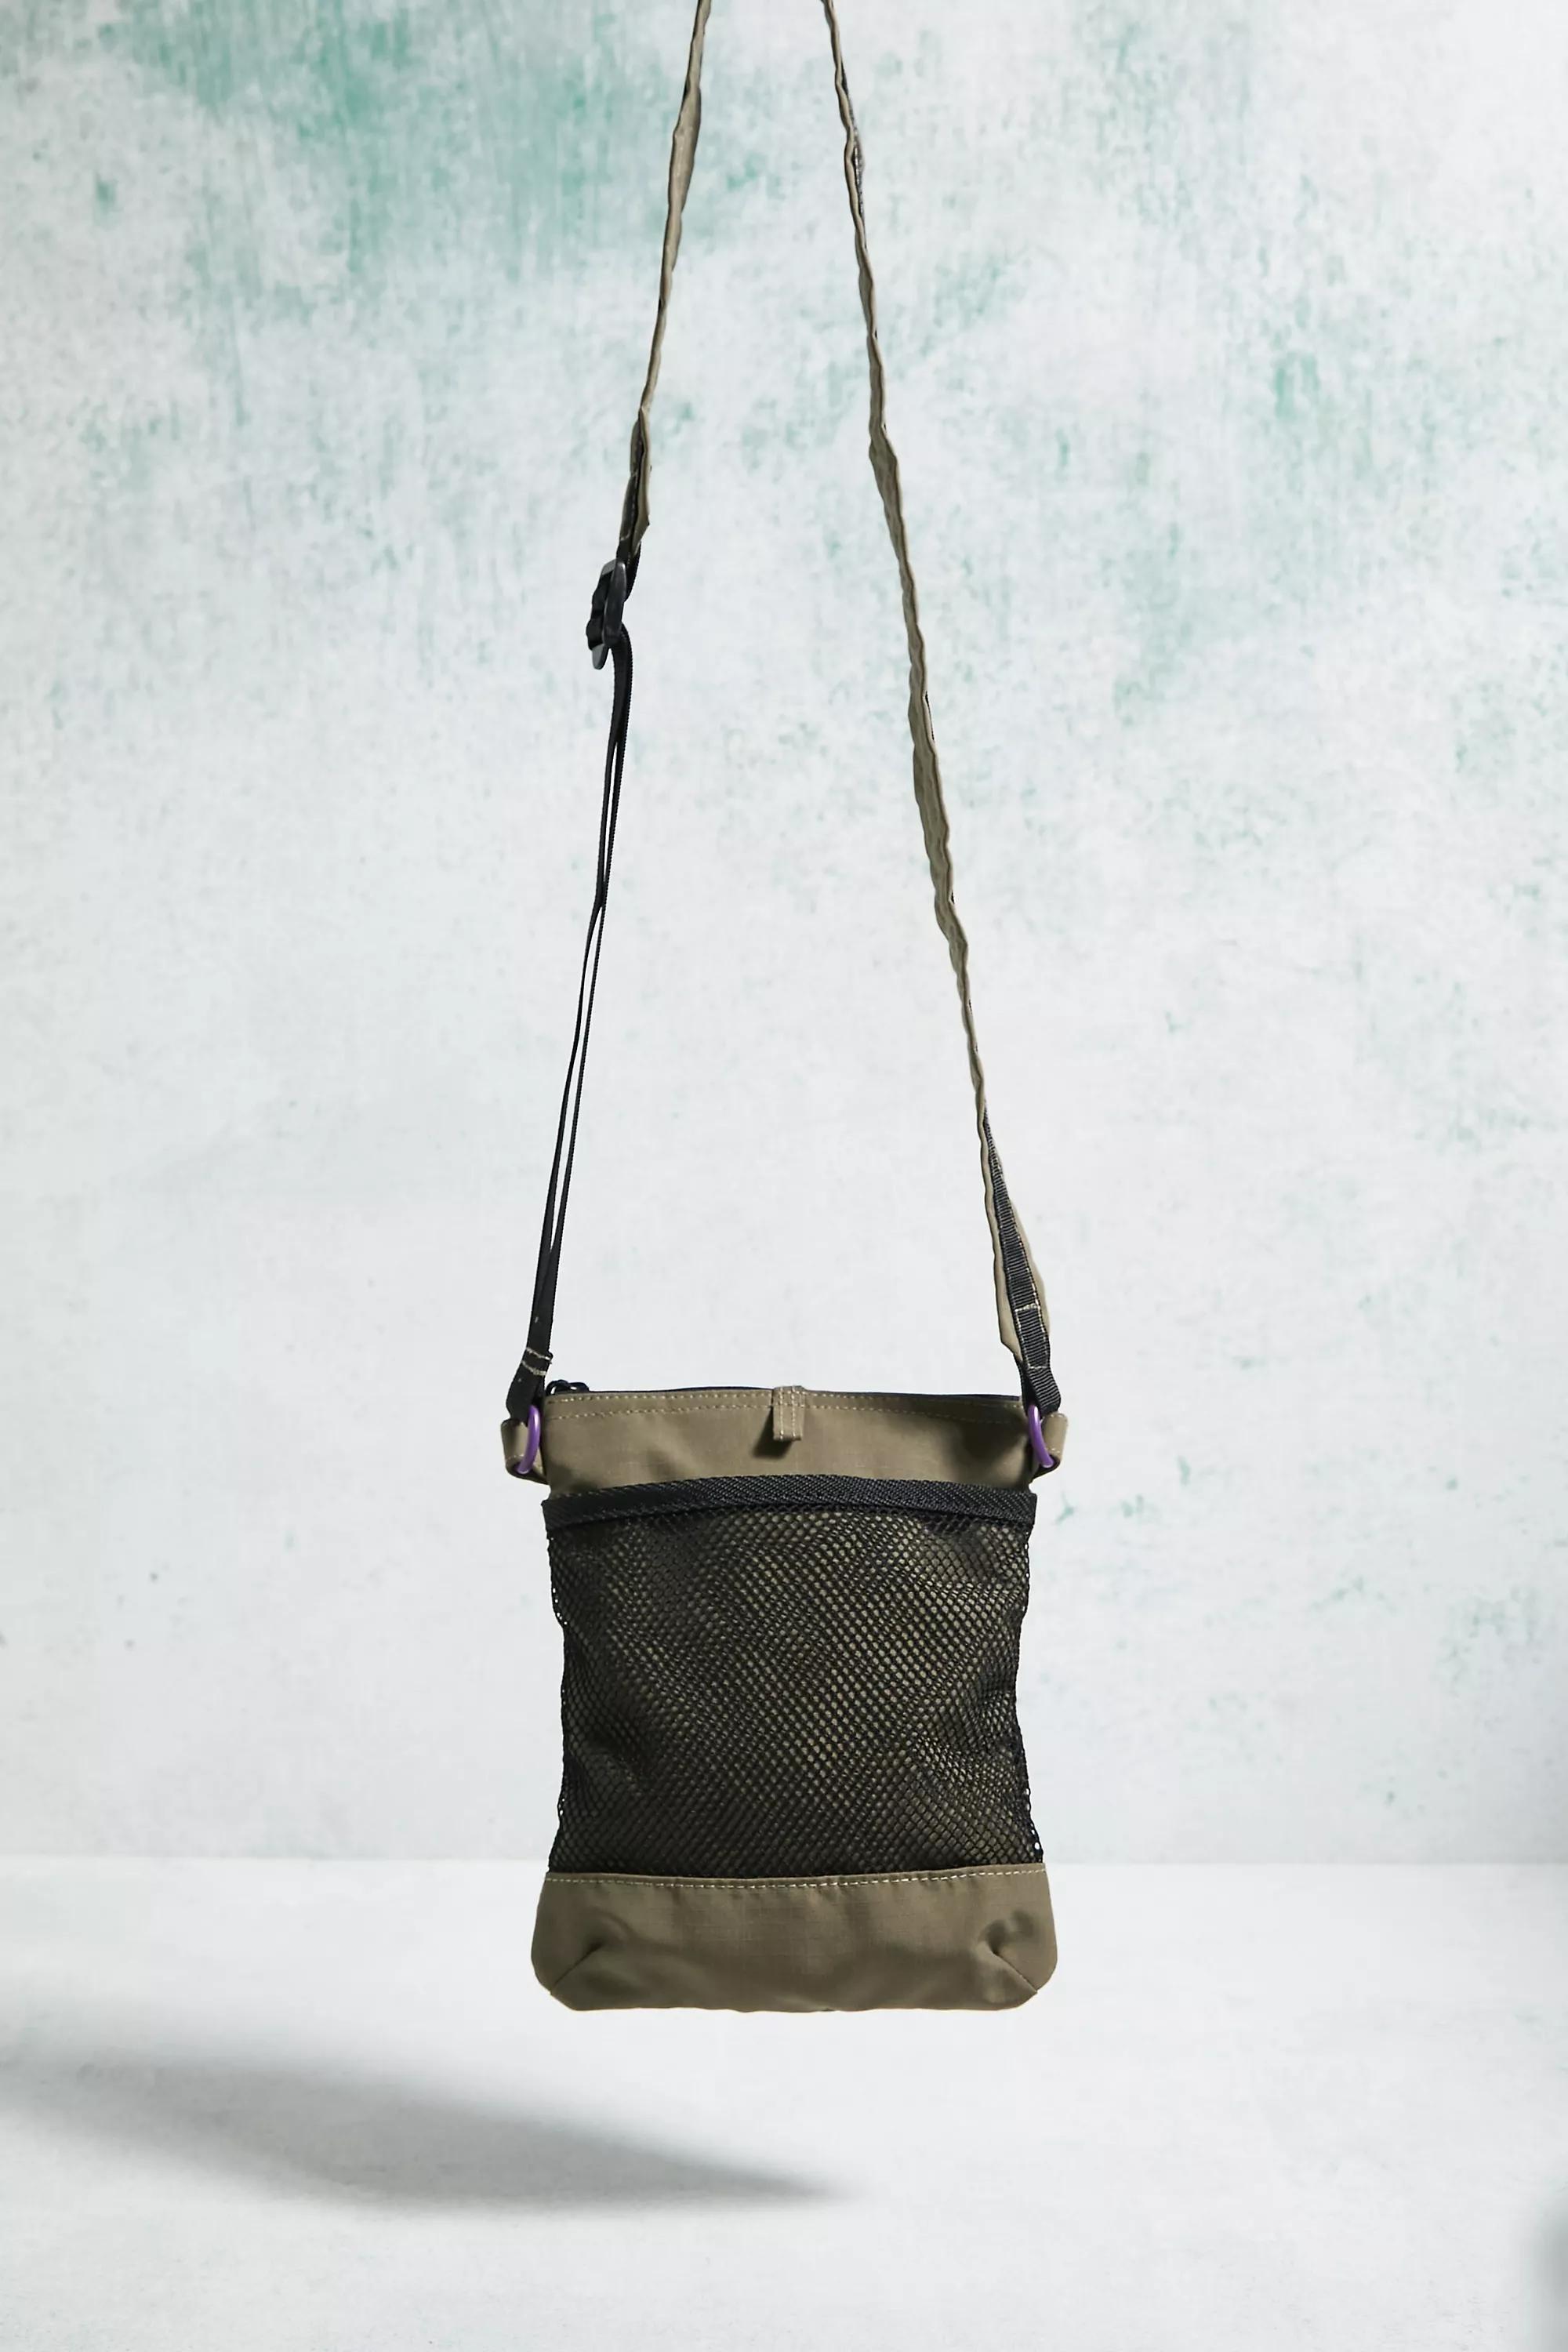 Urban Outfitters - Green Net Crossbody Bag